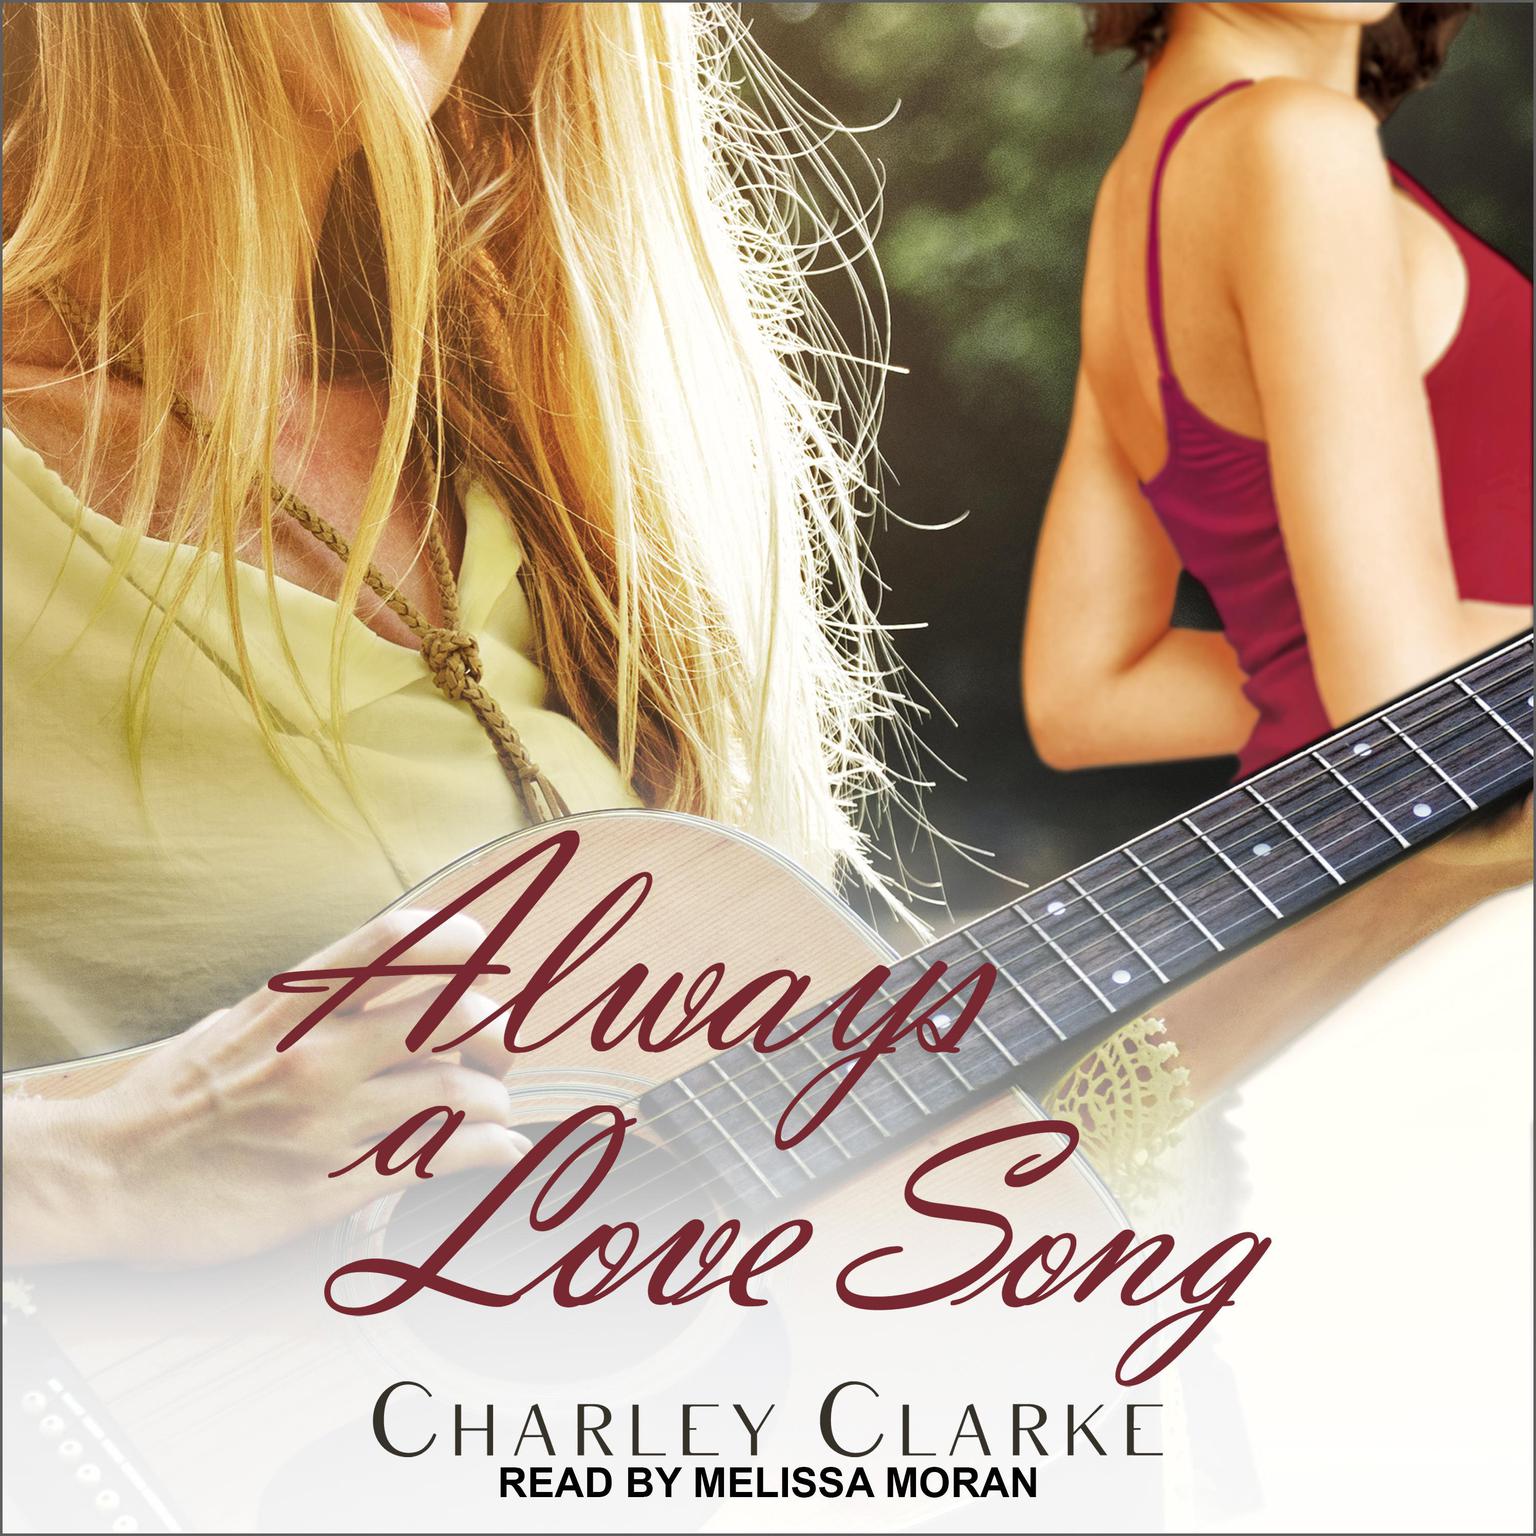 Charley Clarke, Melissa Moran: Always a Love Song (AudiobookFormat, 2019, Ylva)